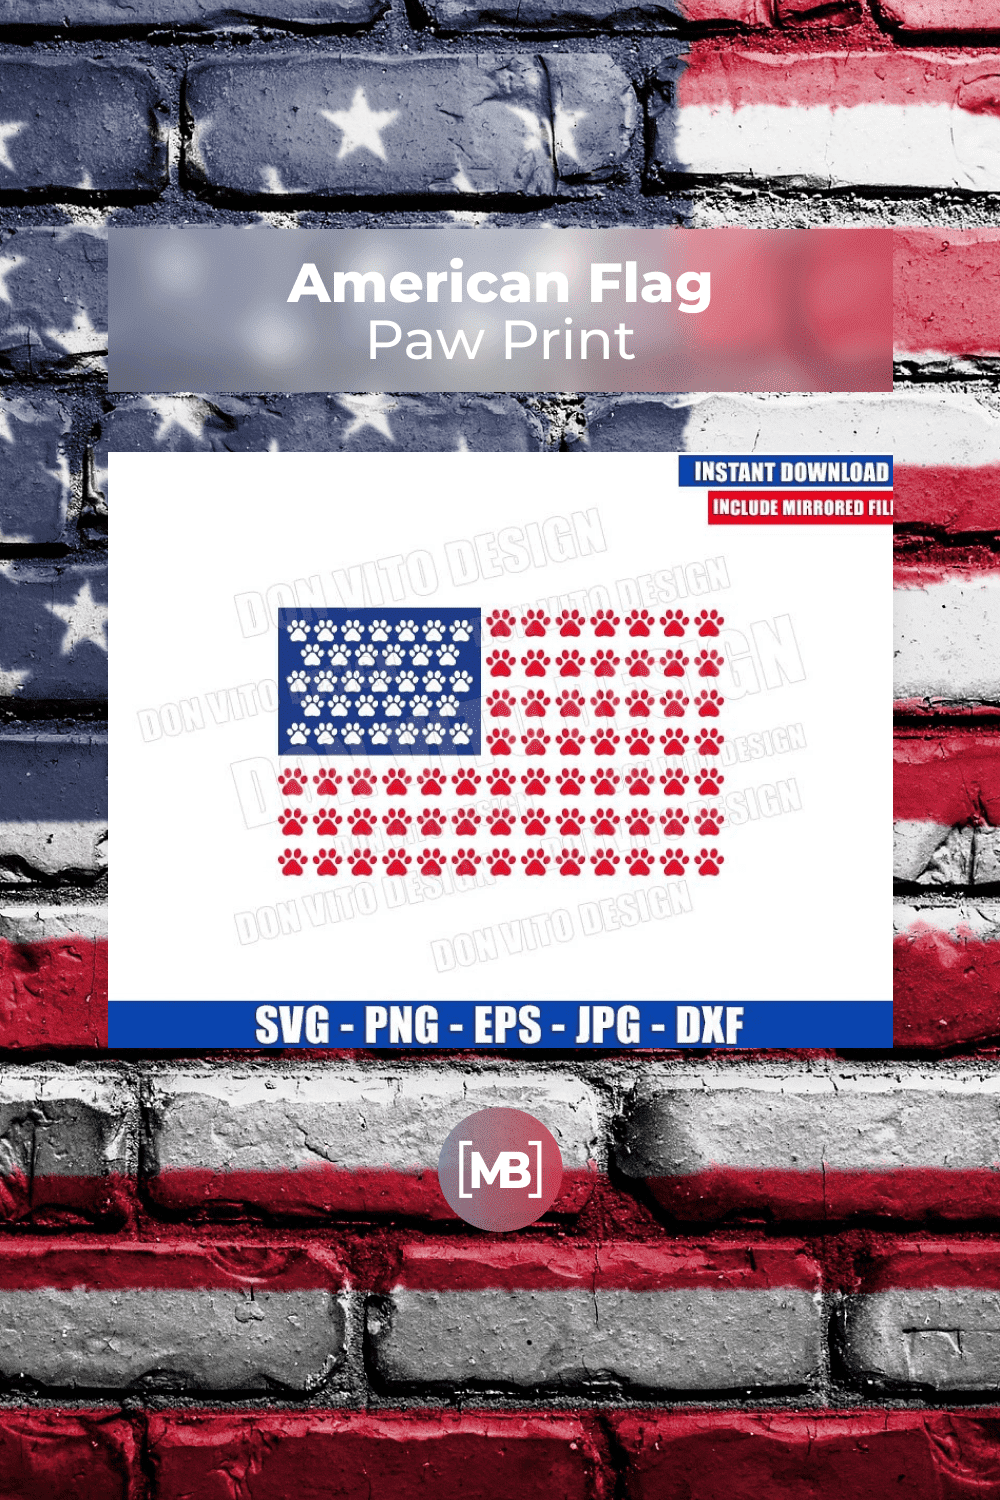 American Flag Paw Print.